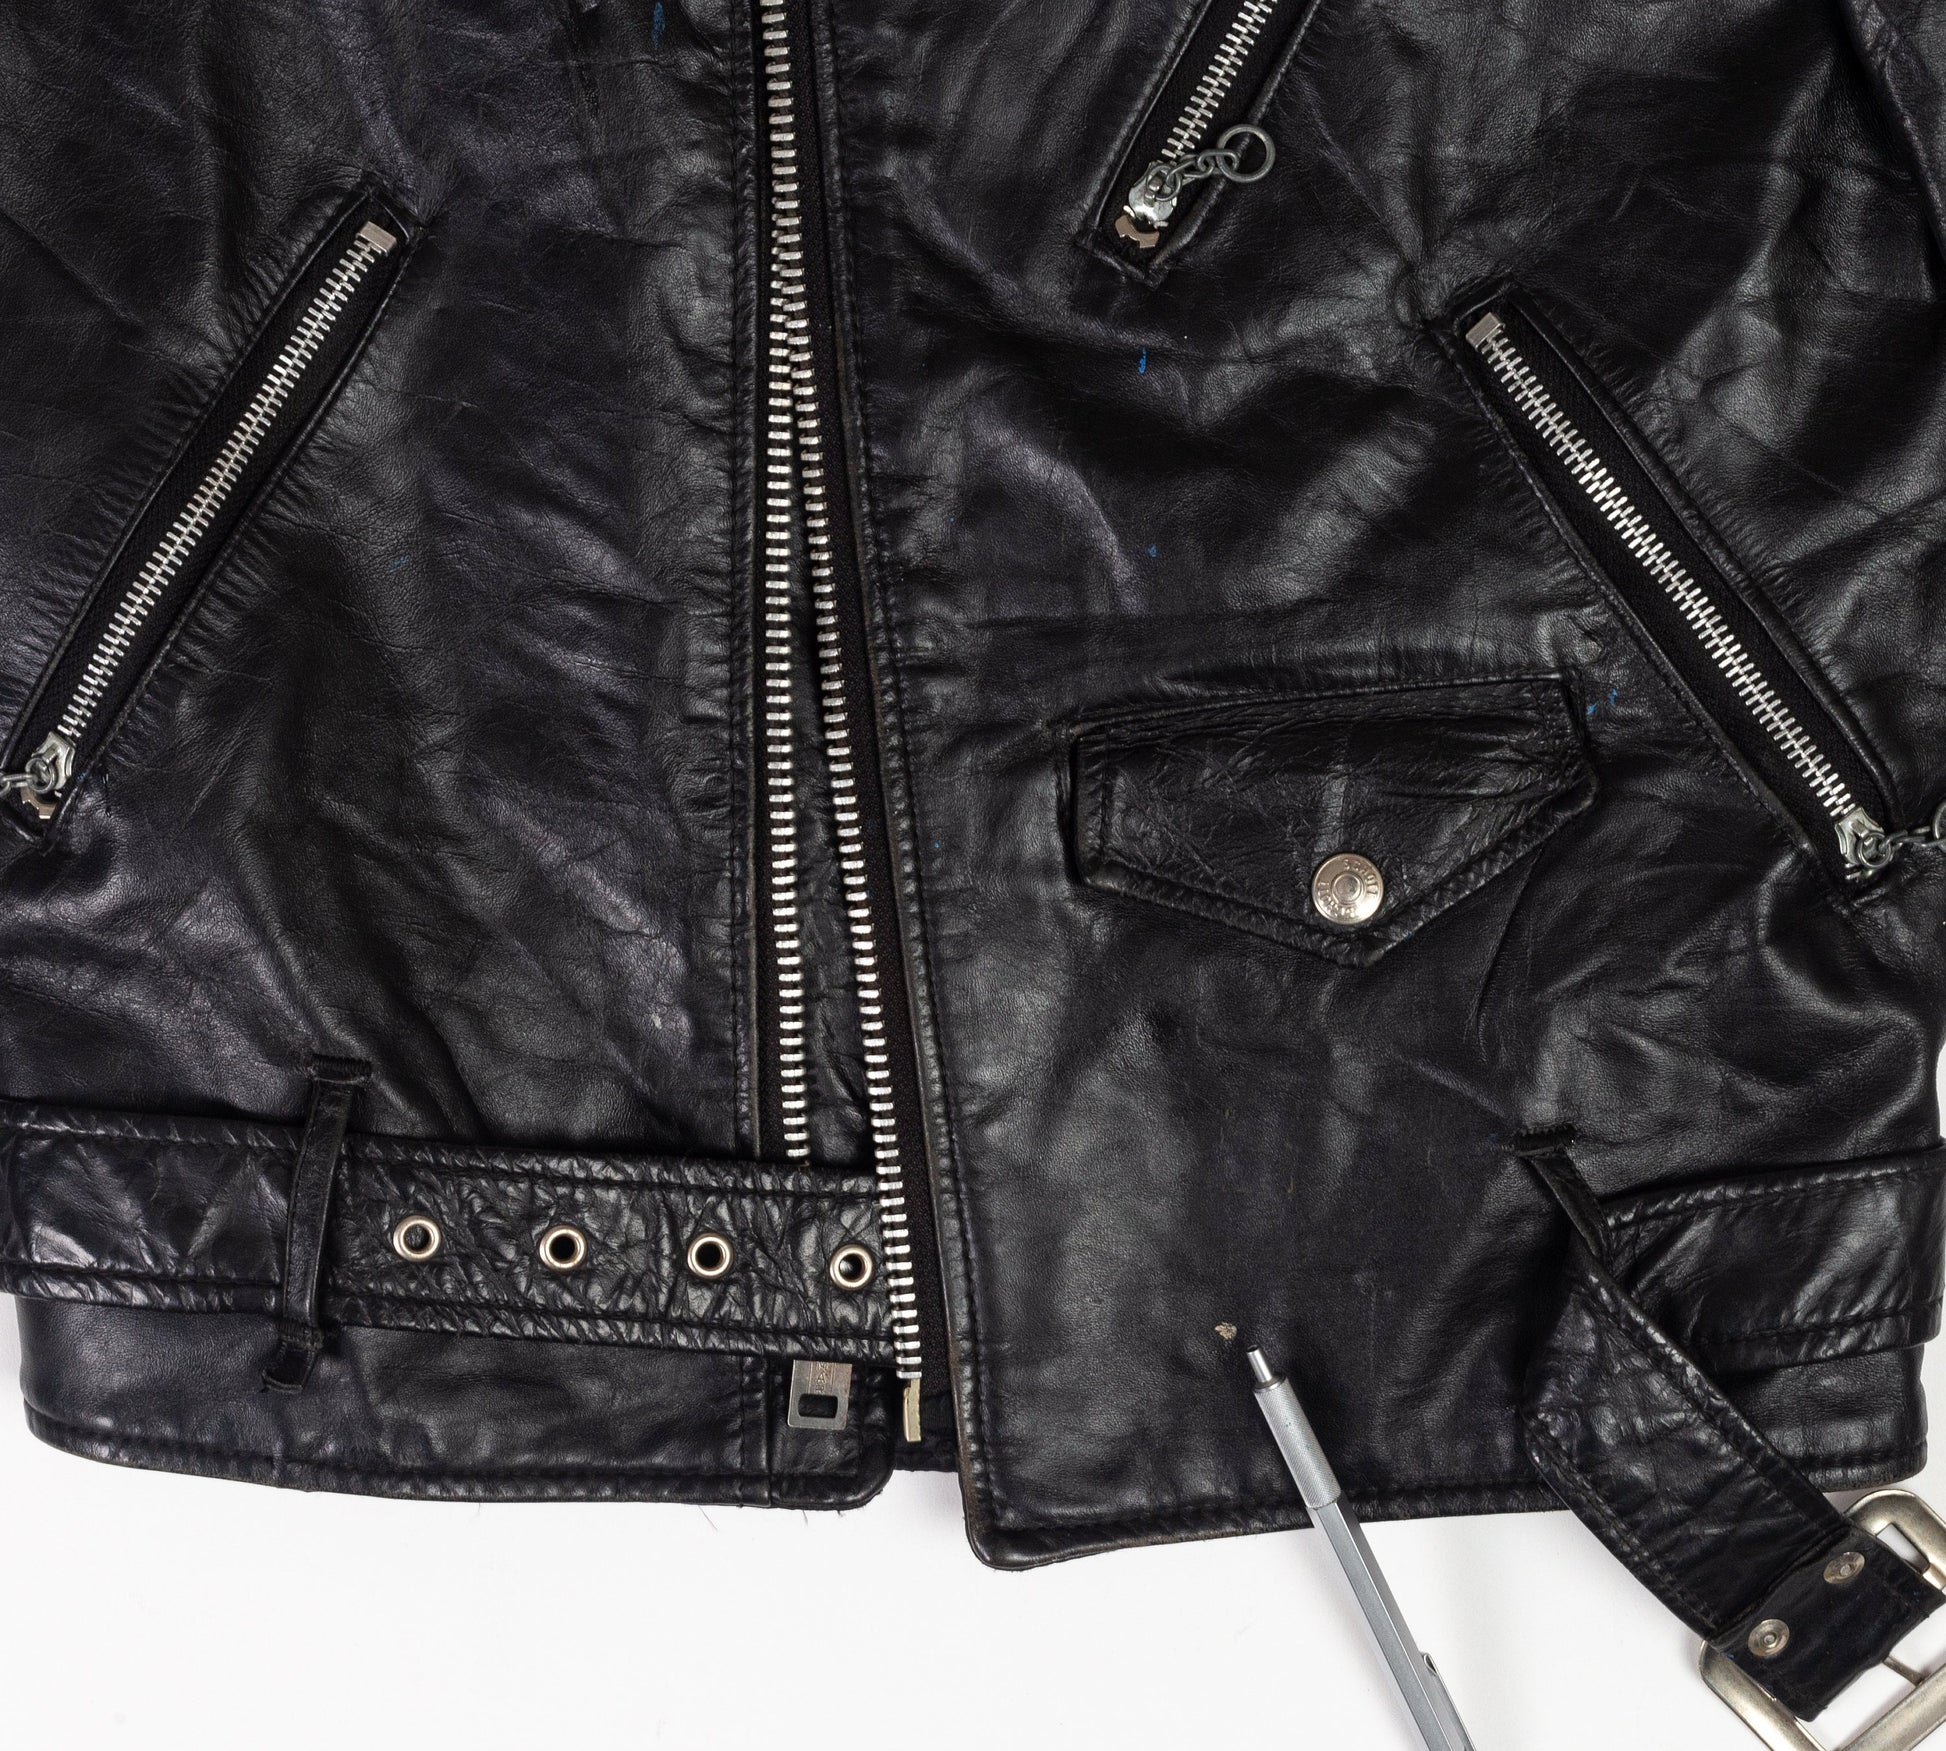 70s Schott Perfecto Leather Moto Jacket - Men's XS, Size 34 